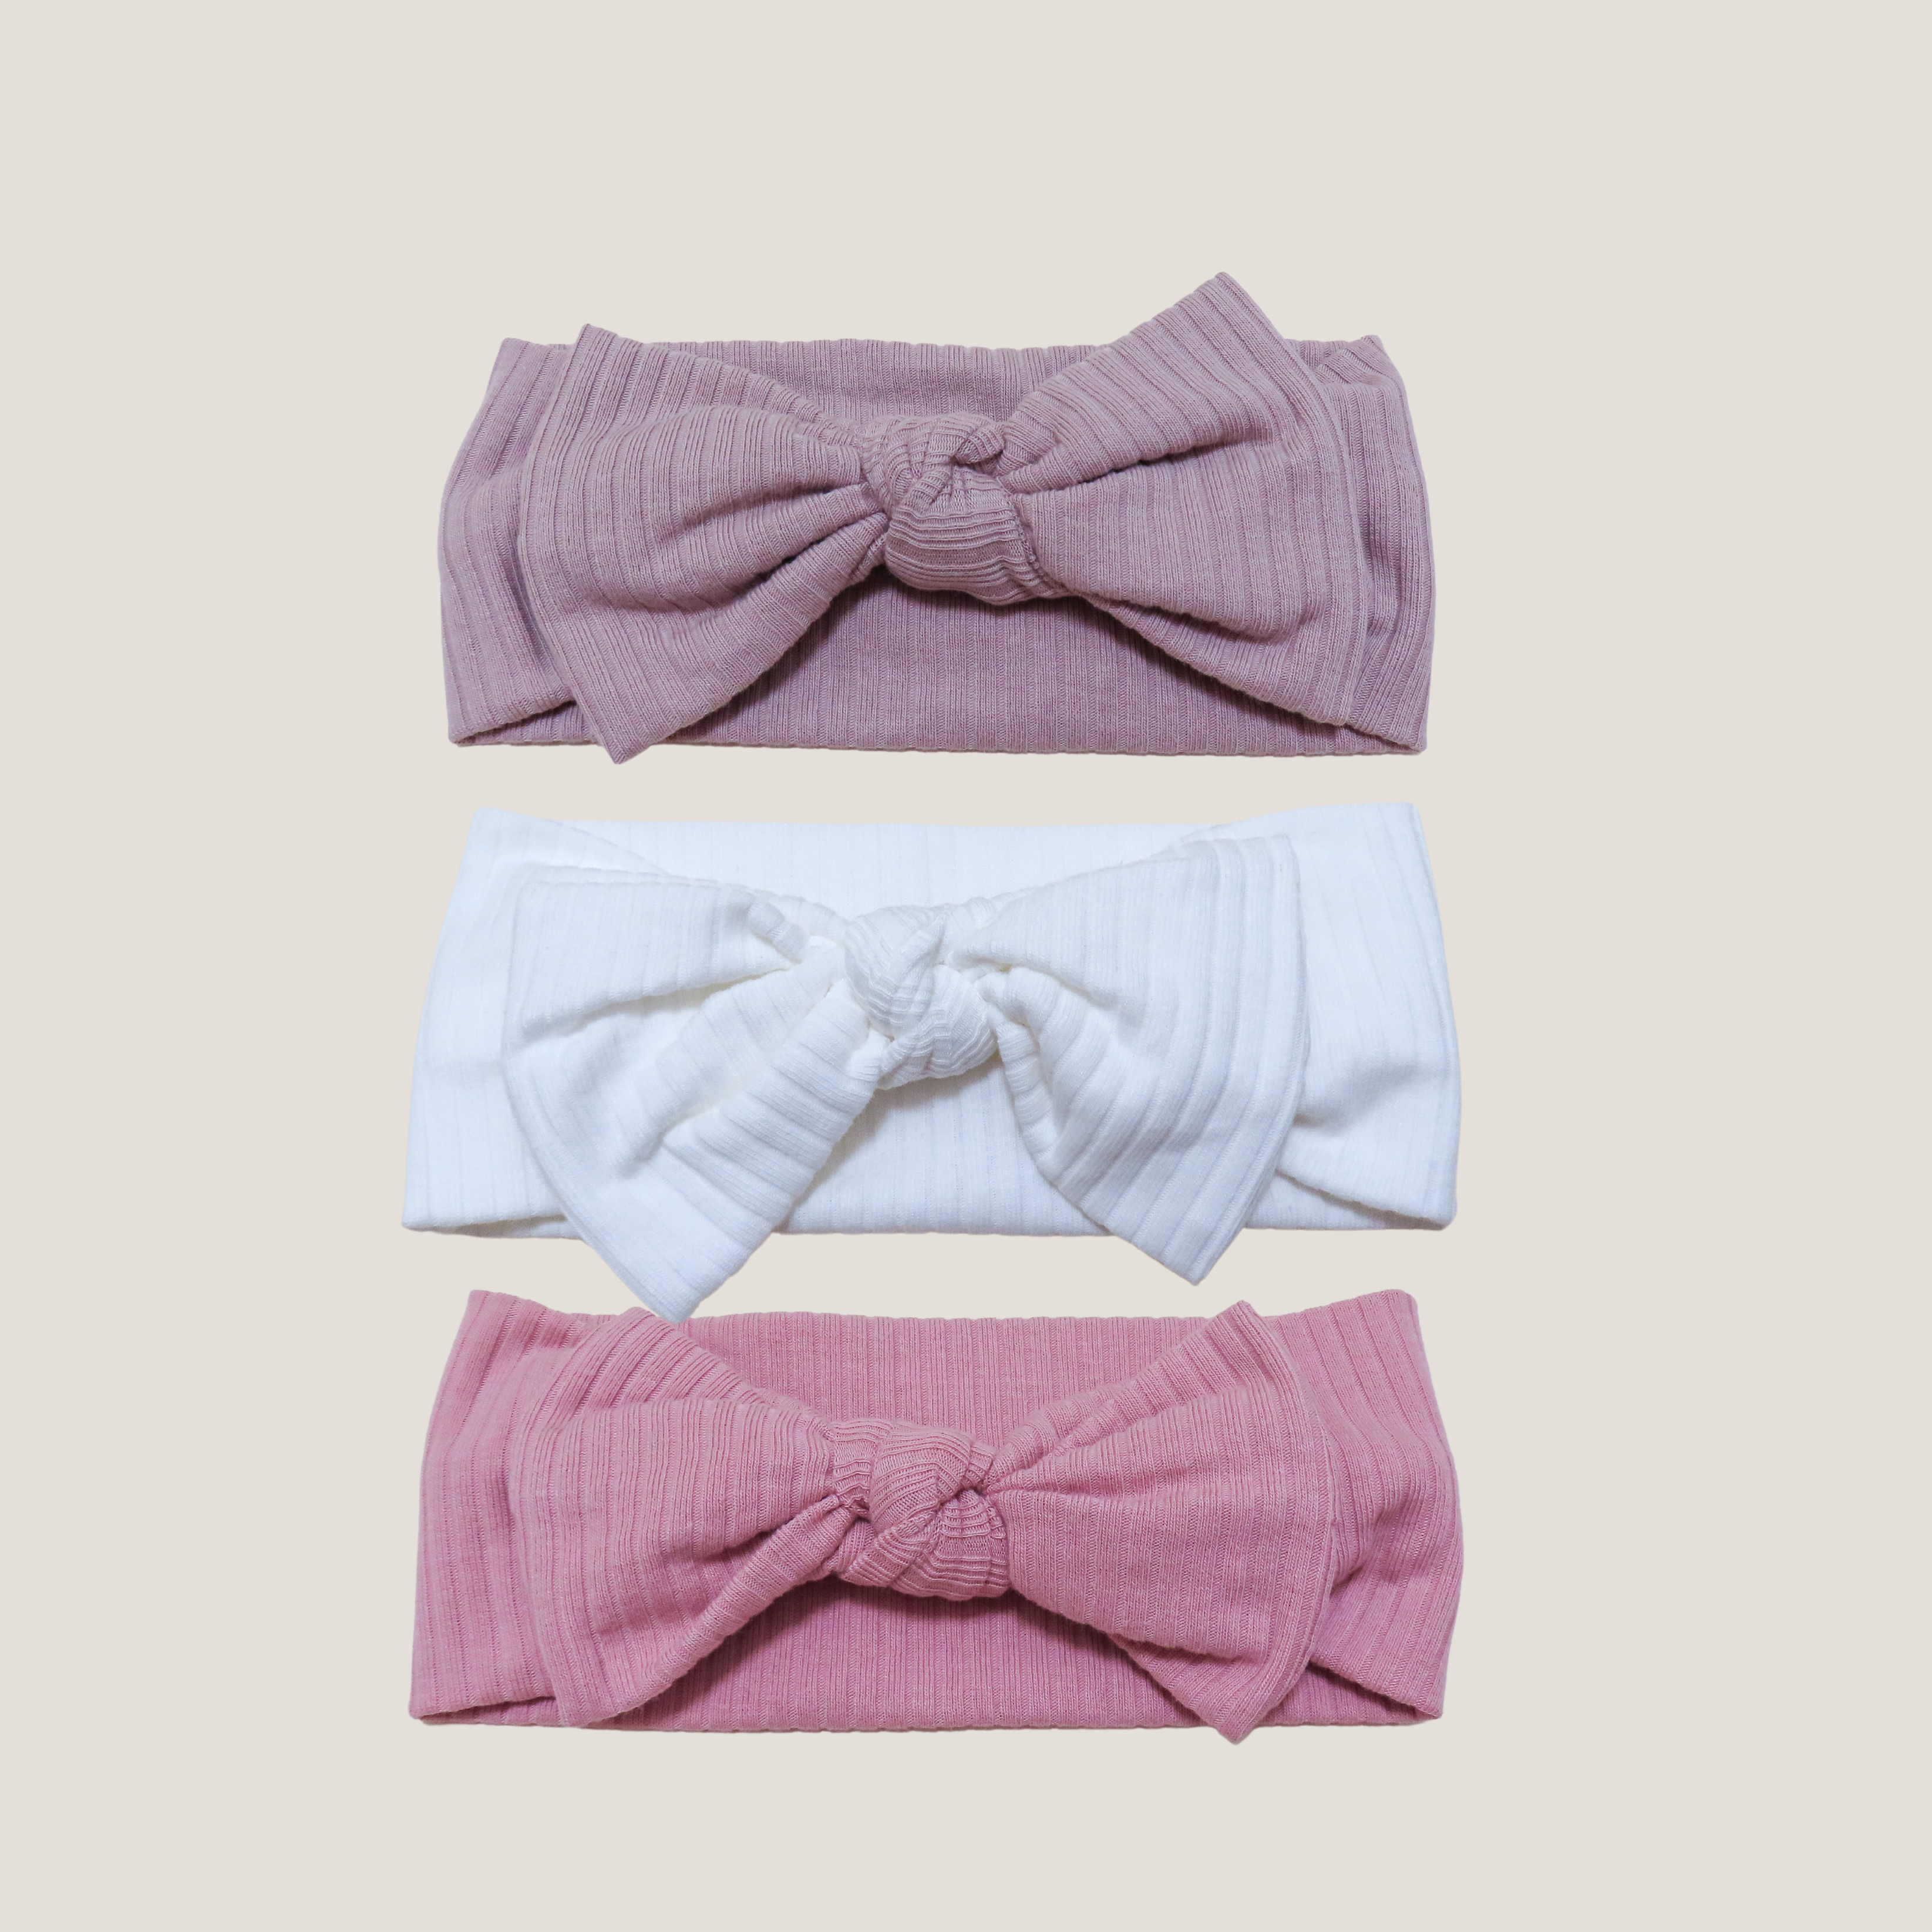 Ribbed Baby Bow Headband Bundle (Light Plum, Winter White, Dusty Pink)